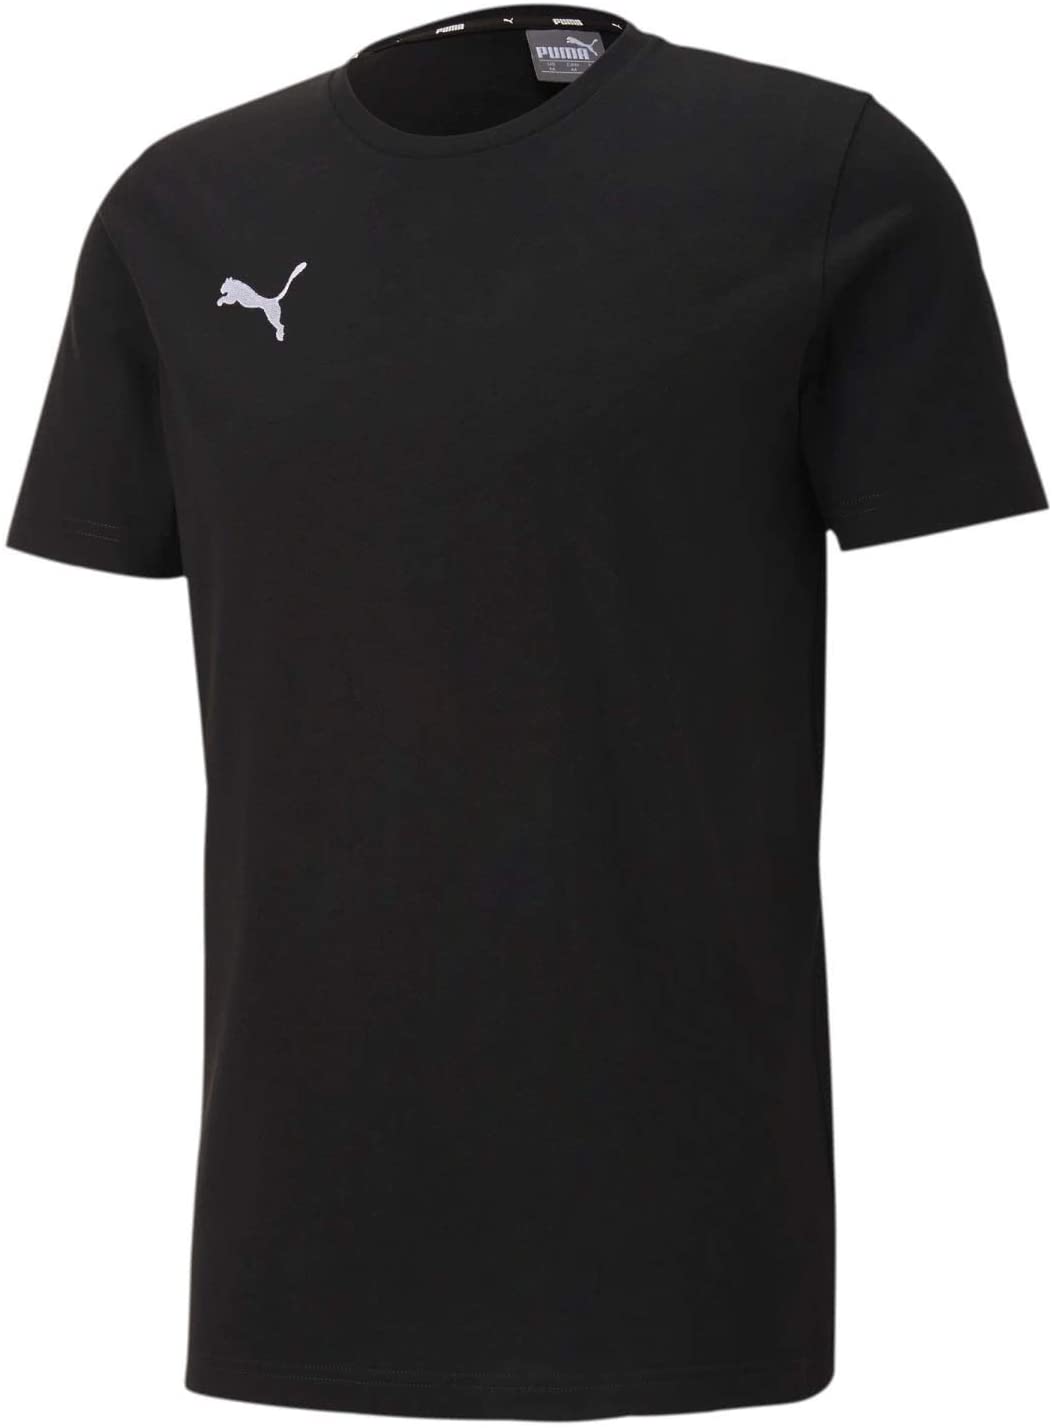 Puma T-shirt - Puma - Manager-shoppen.dk